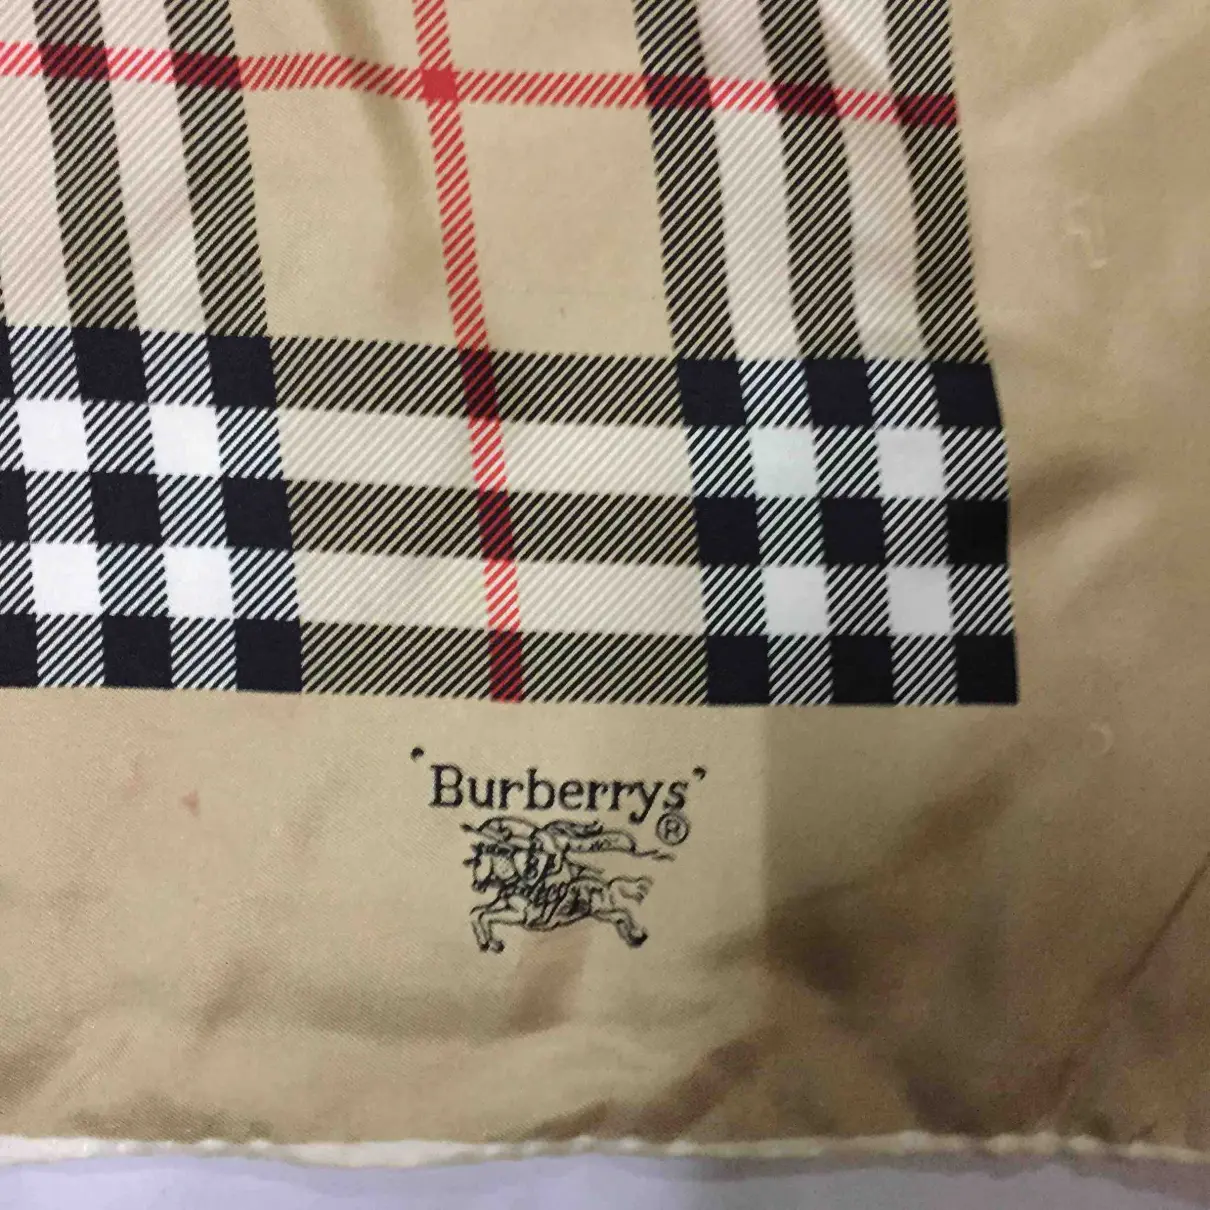 Buy Burberry Silk scarf online - Vintage